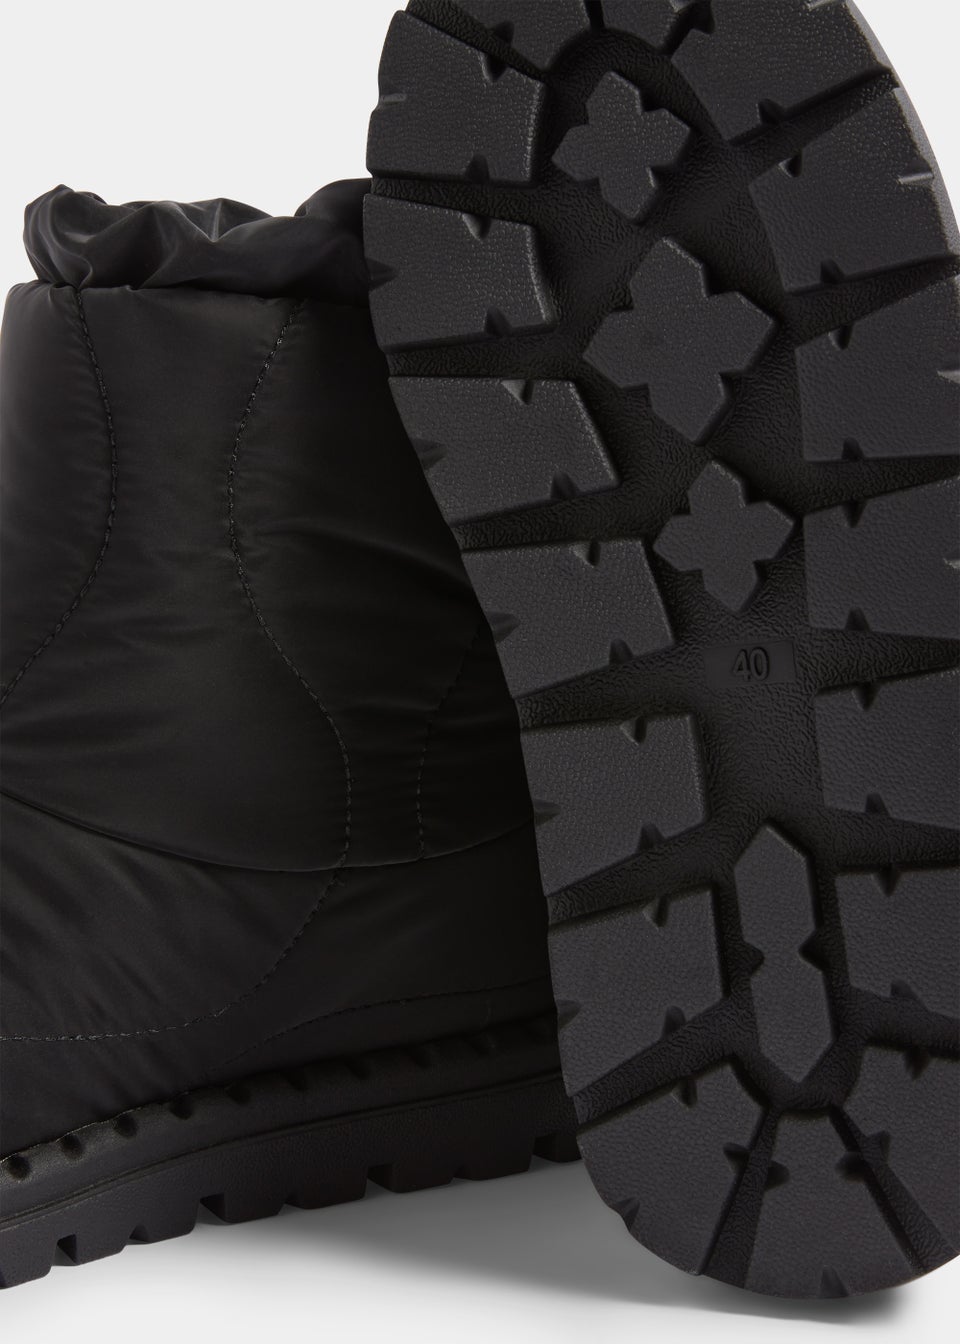 Black Nylon Snow Boots